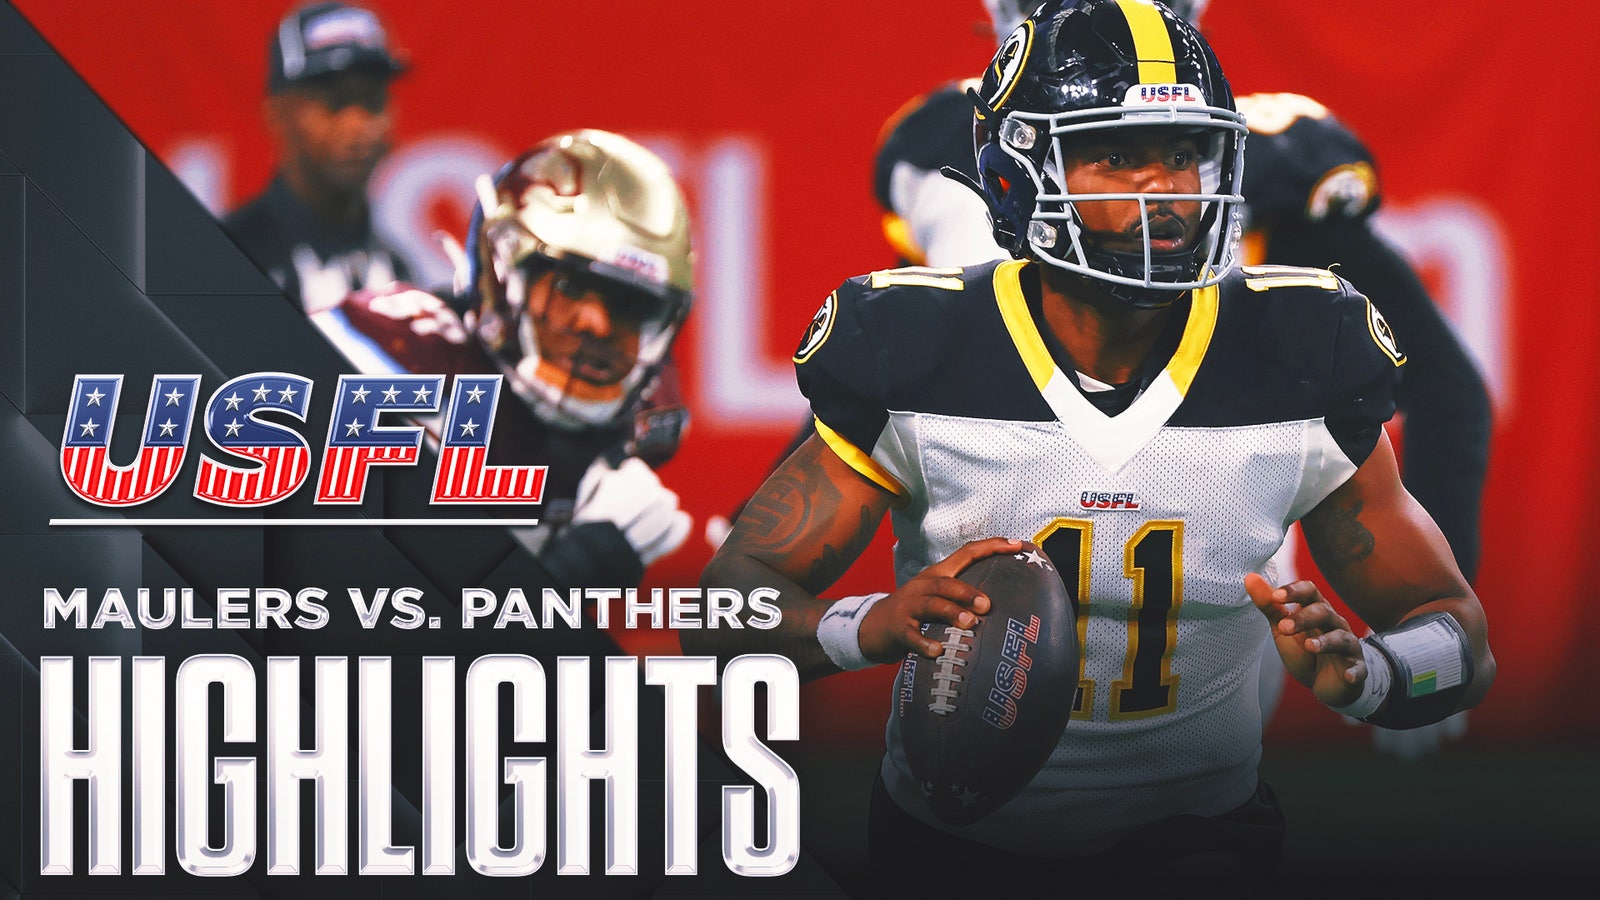 Pittsburgh Maulers vs. Michigan Panthers highlights